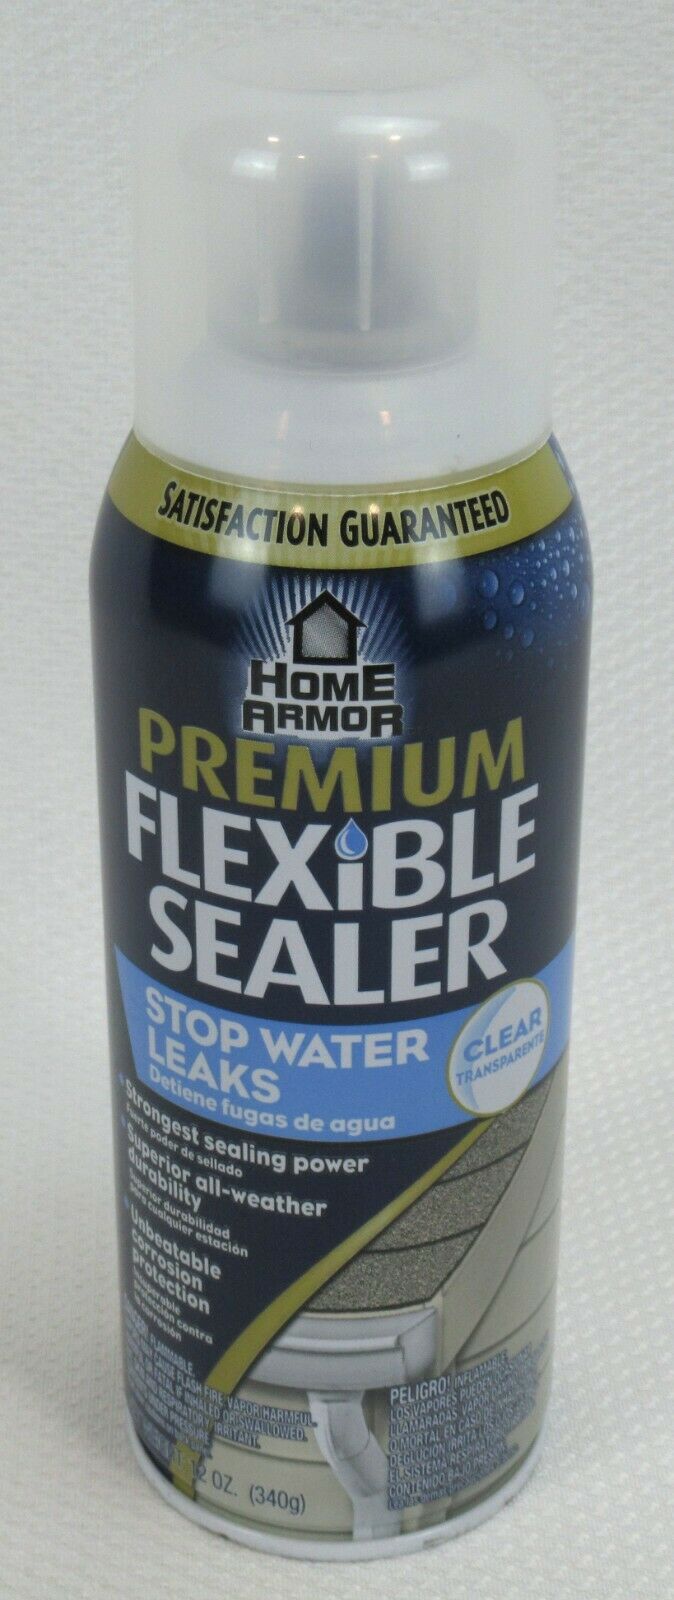 Premium Flexible Sealer Spray Clear 12oz.